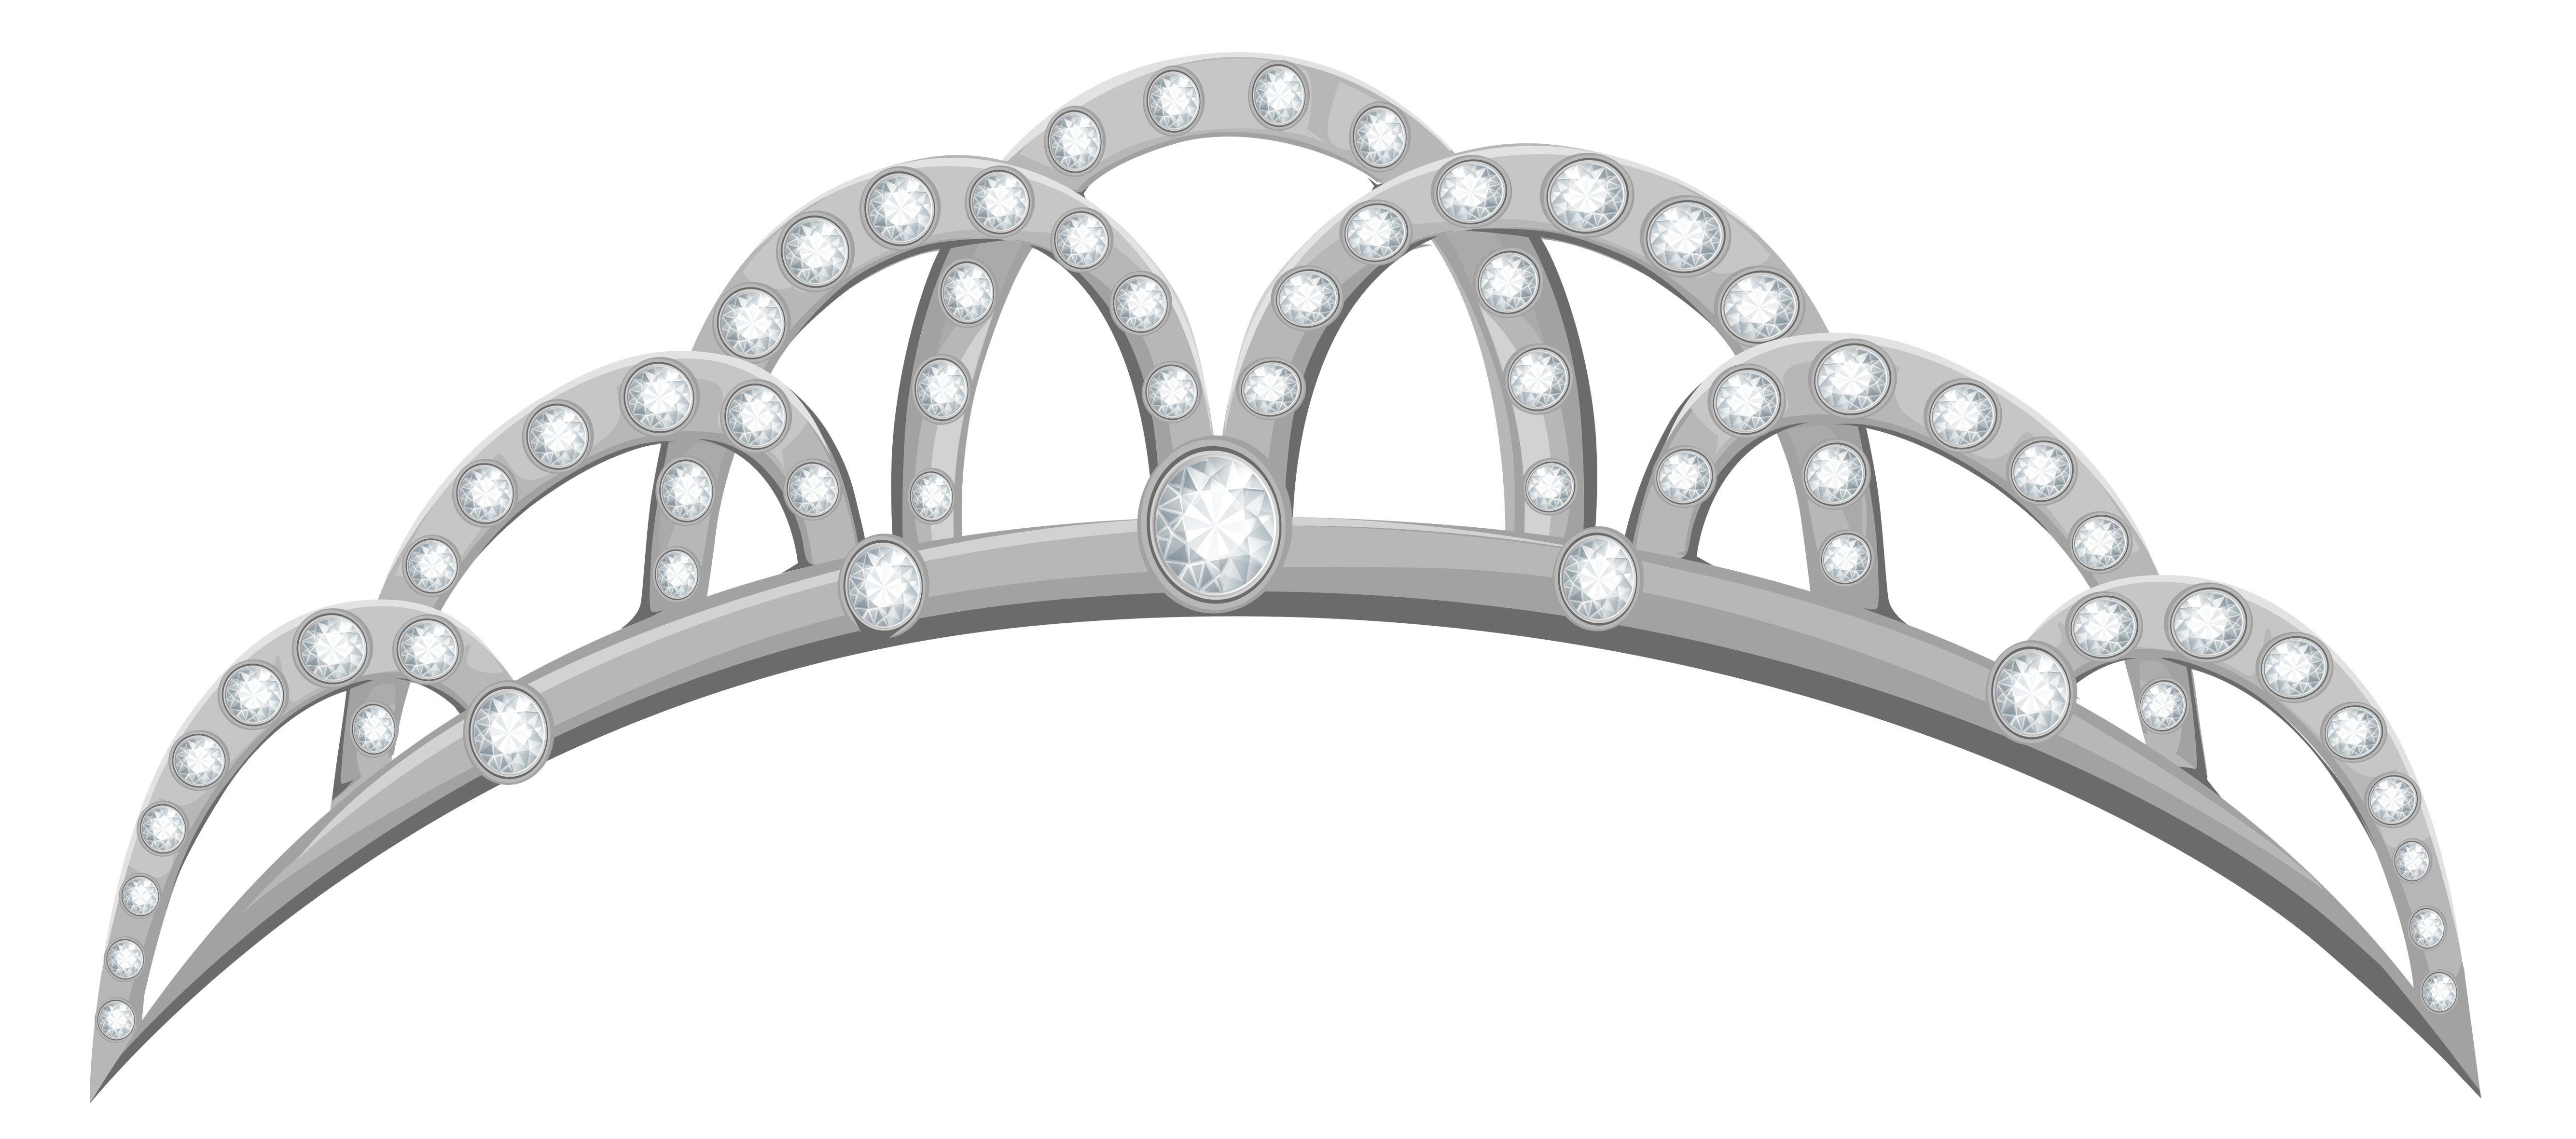 Silver png clipart image. Crown clip art tiara